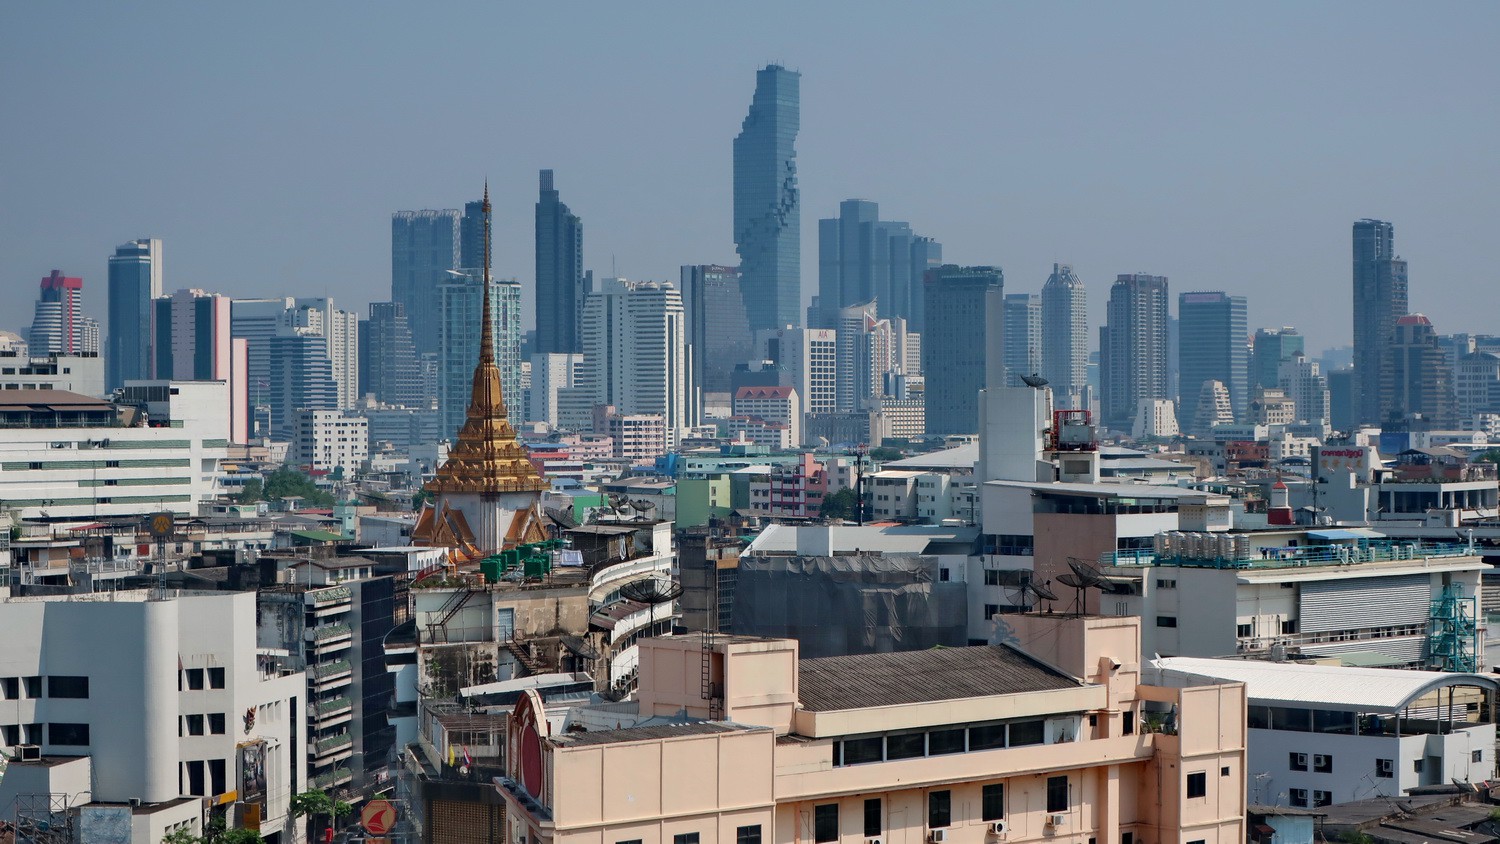 Another skyline of Bangkok